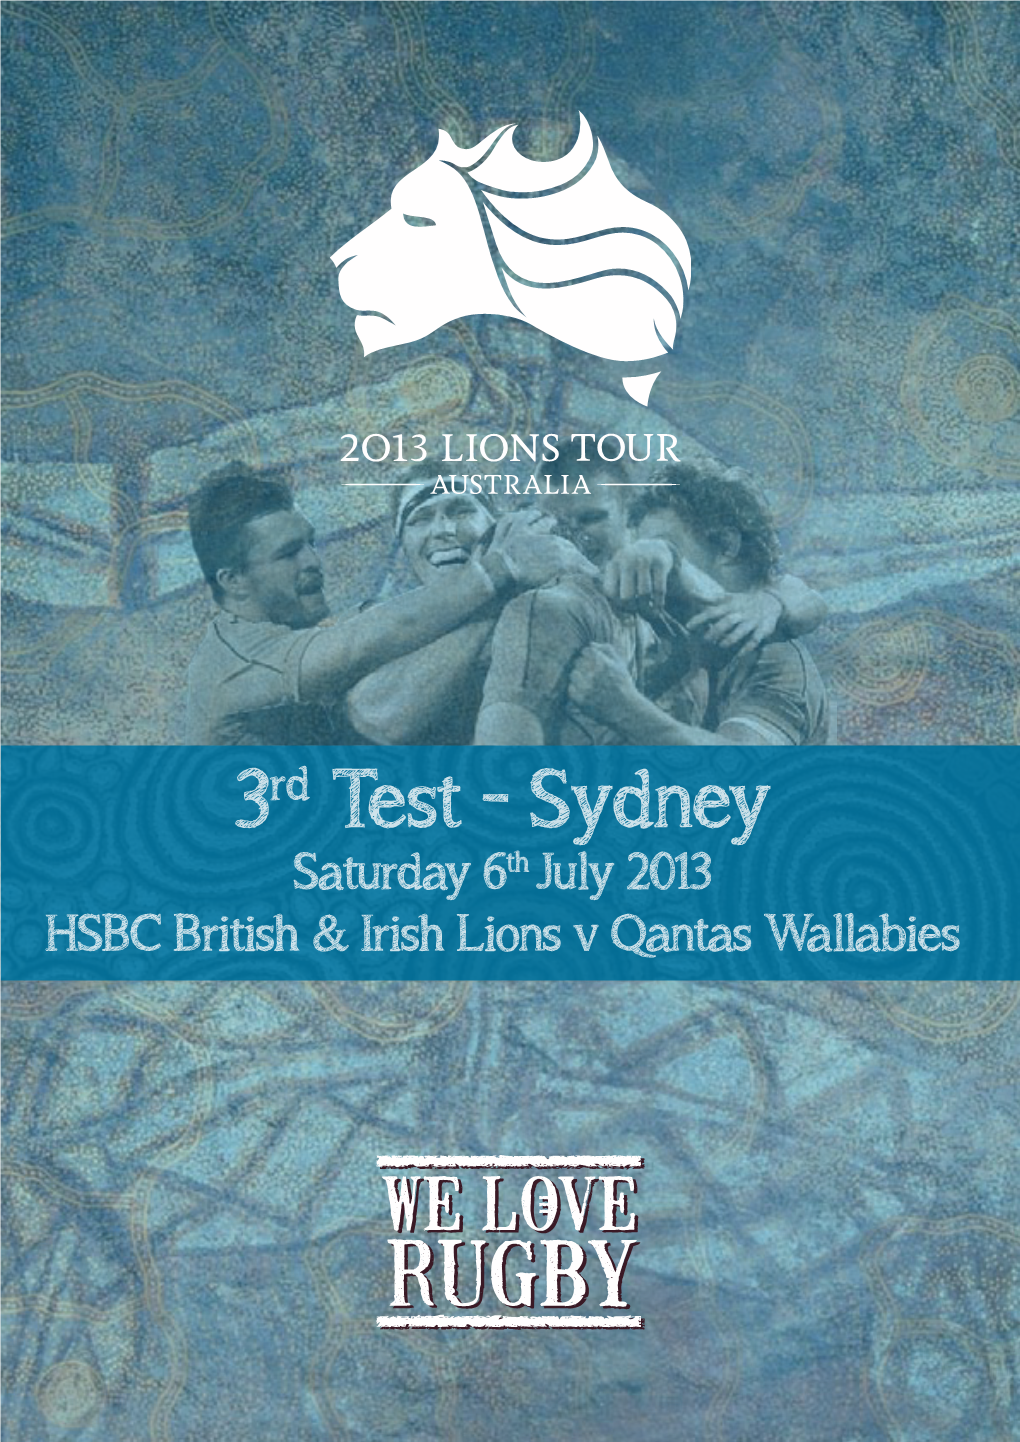 Sydney Saturday 6Th July 2013 HSBC British & Irish Lions V Qantas Wallabies 2013 Lions Tour - Australia